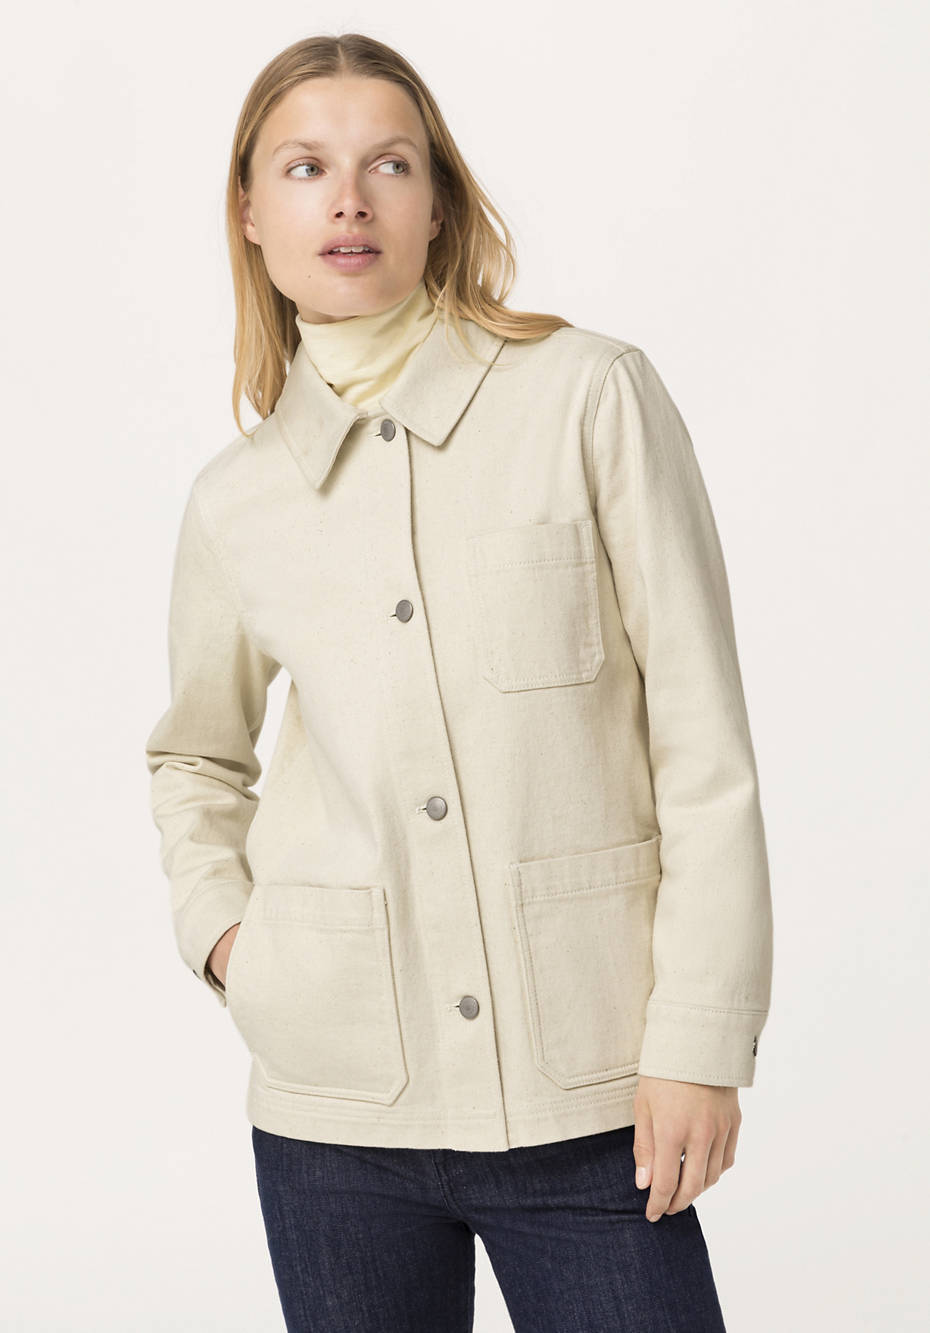 Denim jacket made from organic denim with hemp